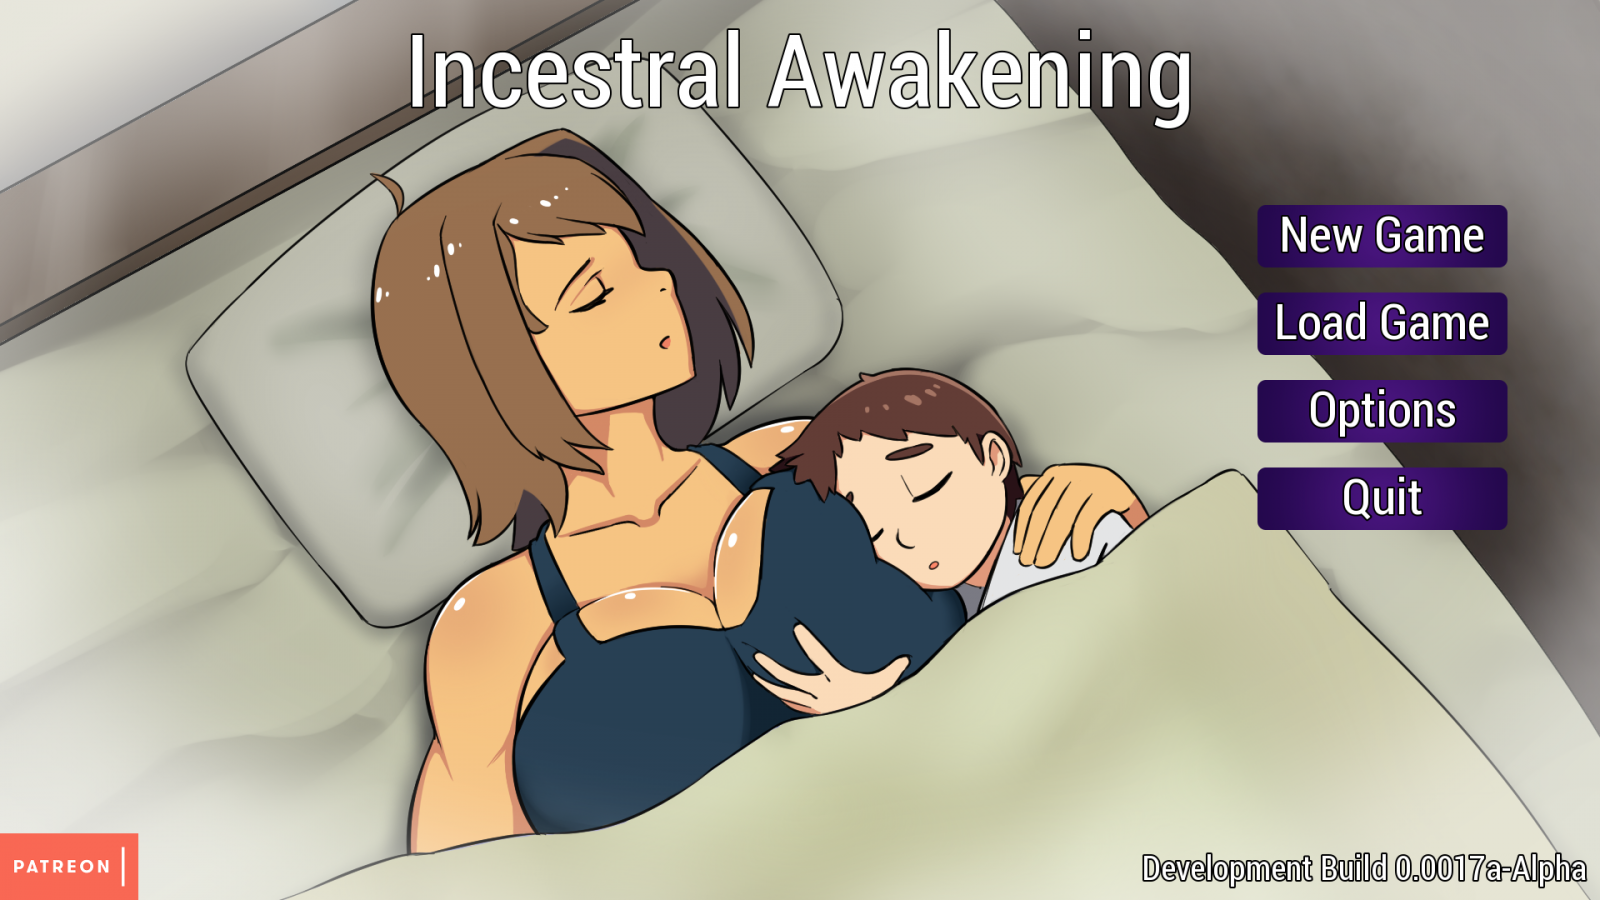 Insexual awakening